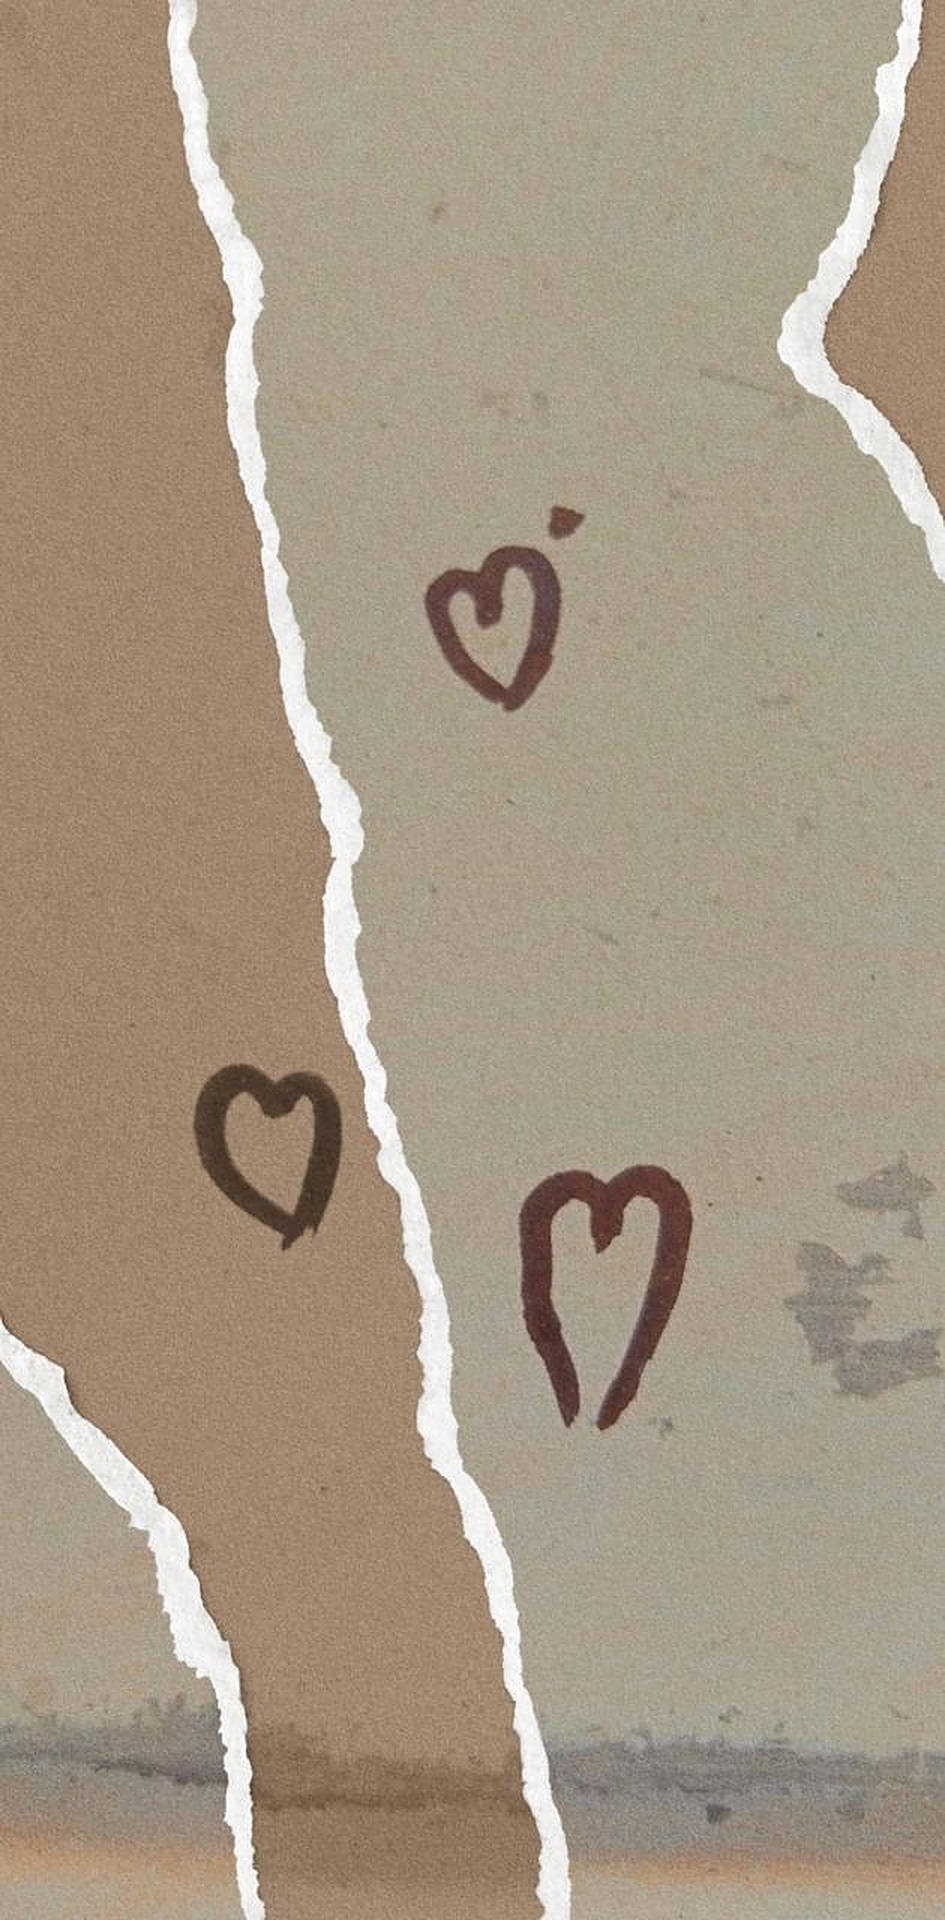 Brown Paper Heart Doodles Wallpaper